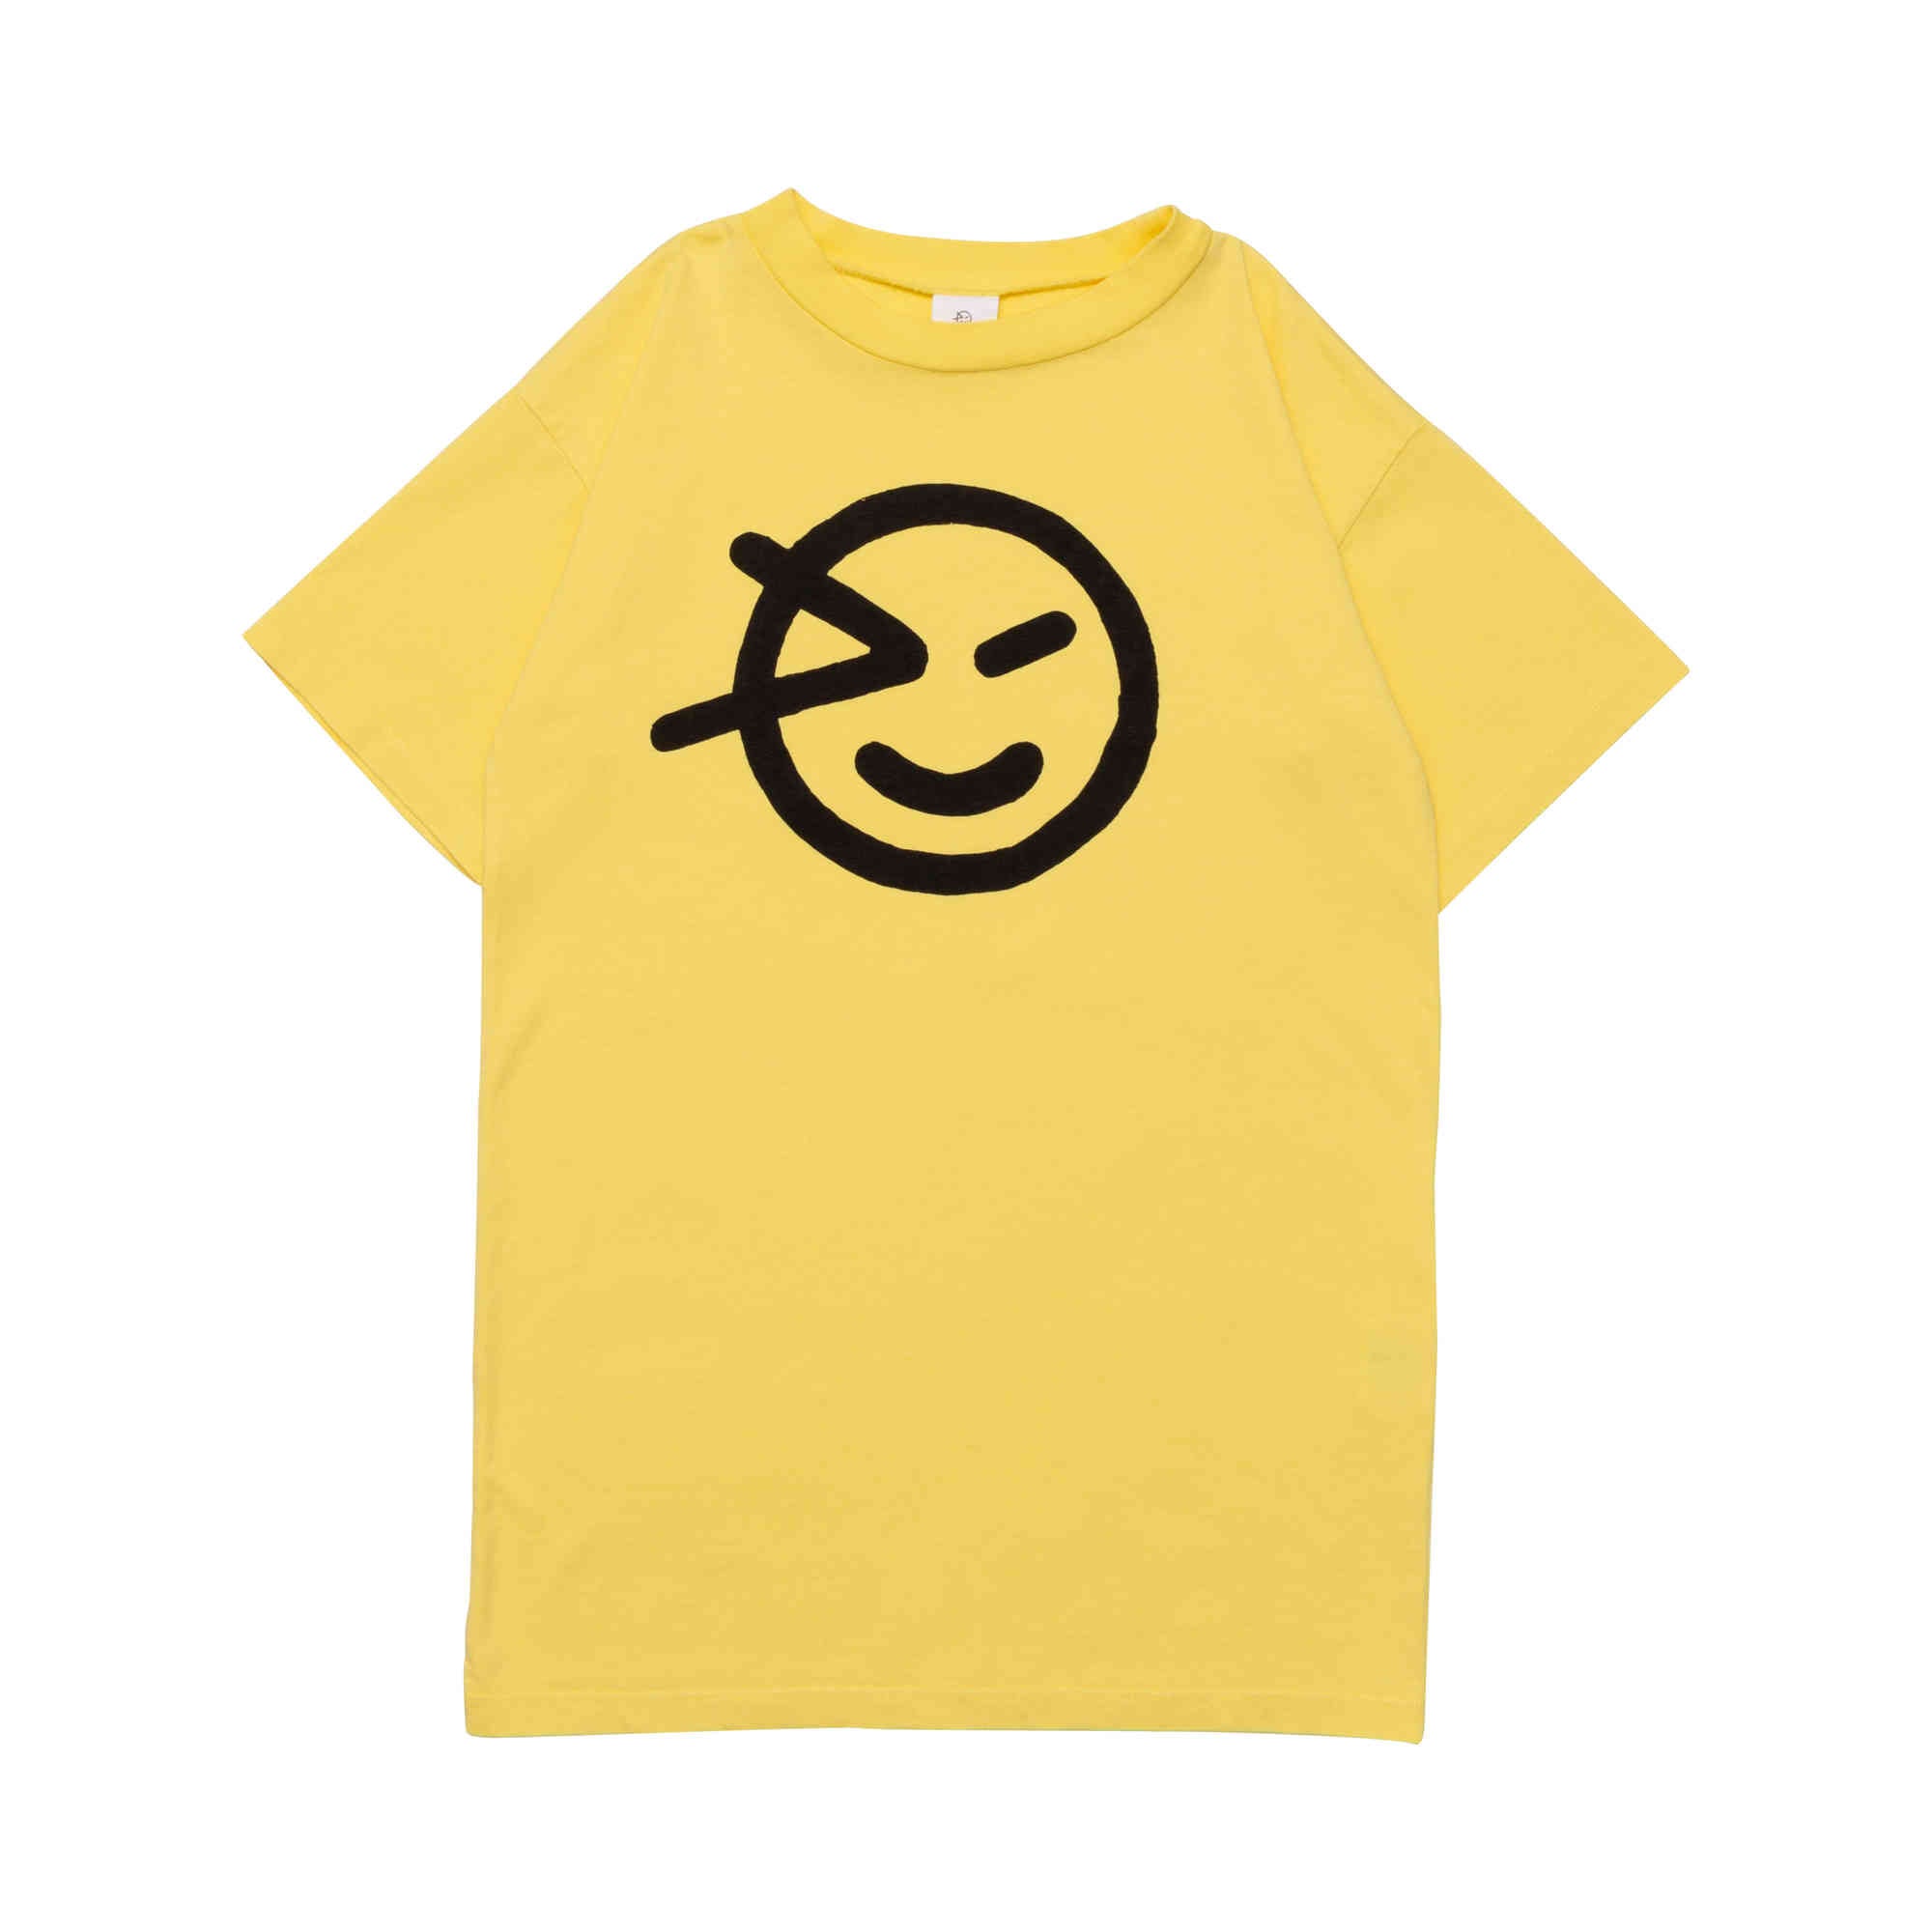 Girls Yellow T-shirt Dress